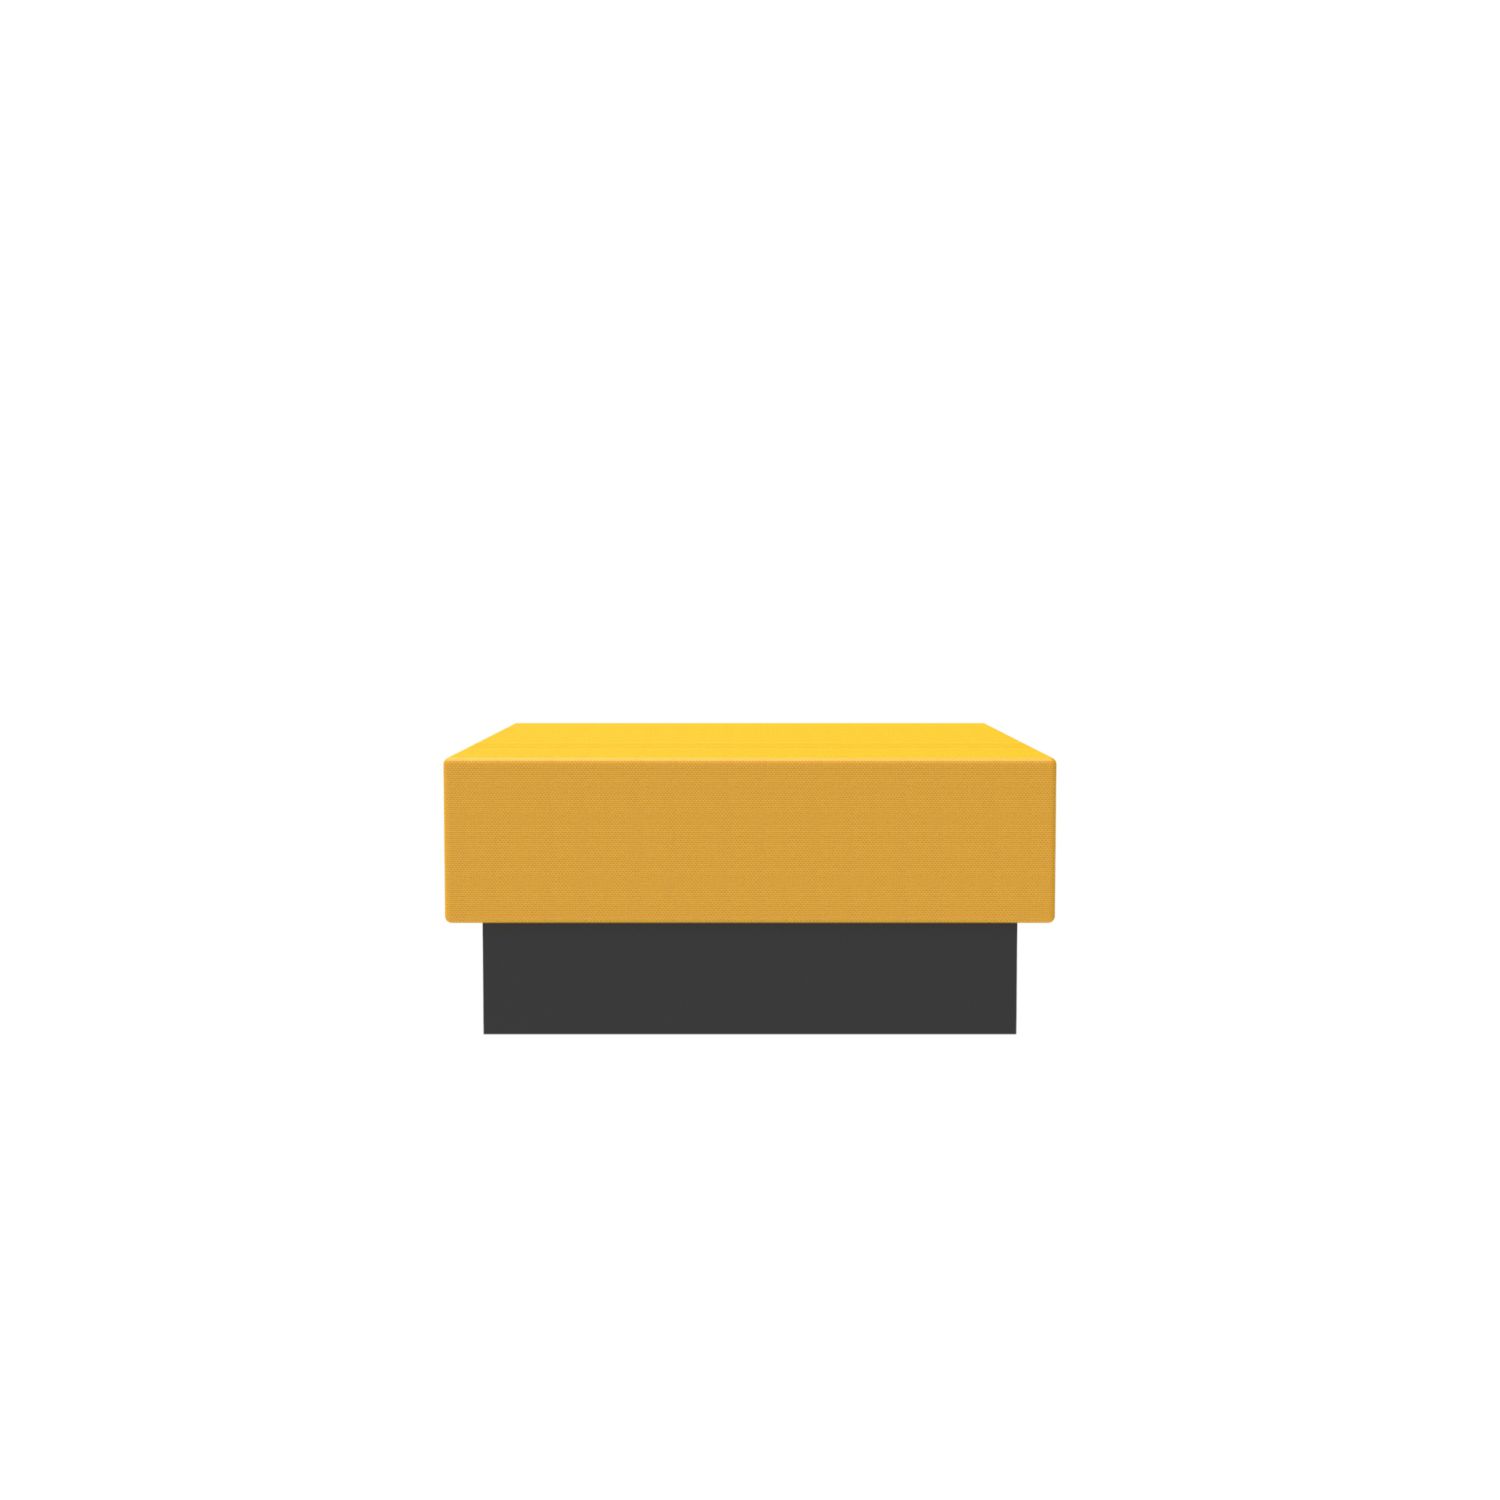 lensvelt oma blocks lounging edition closed base without backrest 90 cm width lemon yellow 051 black ral9005 hard leg ends